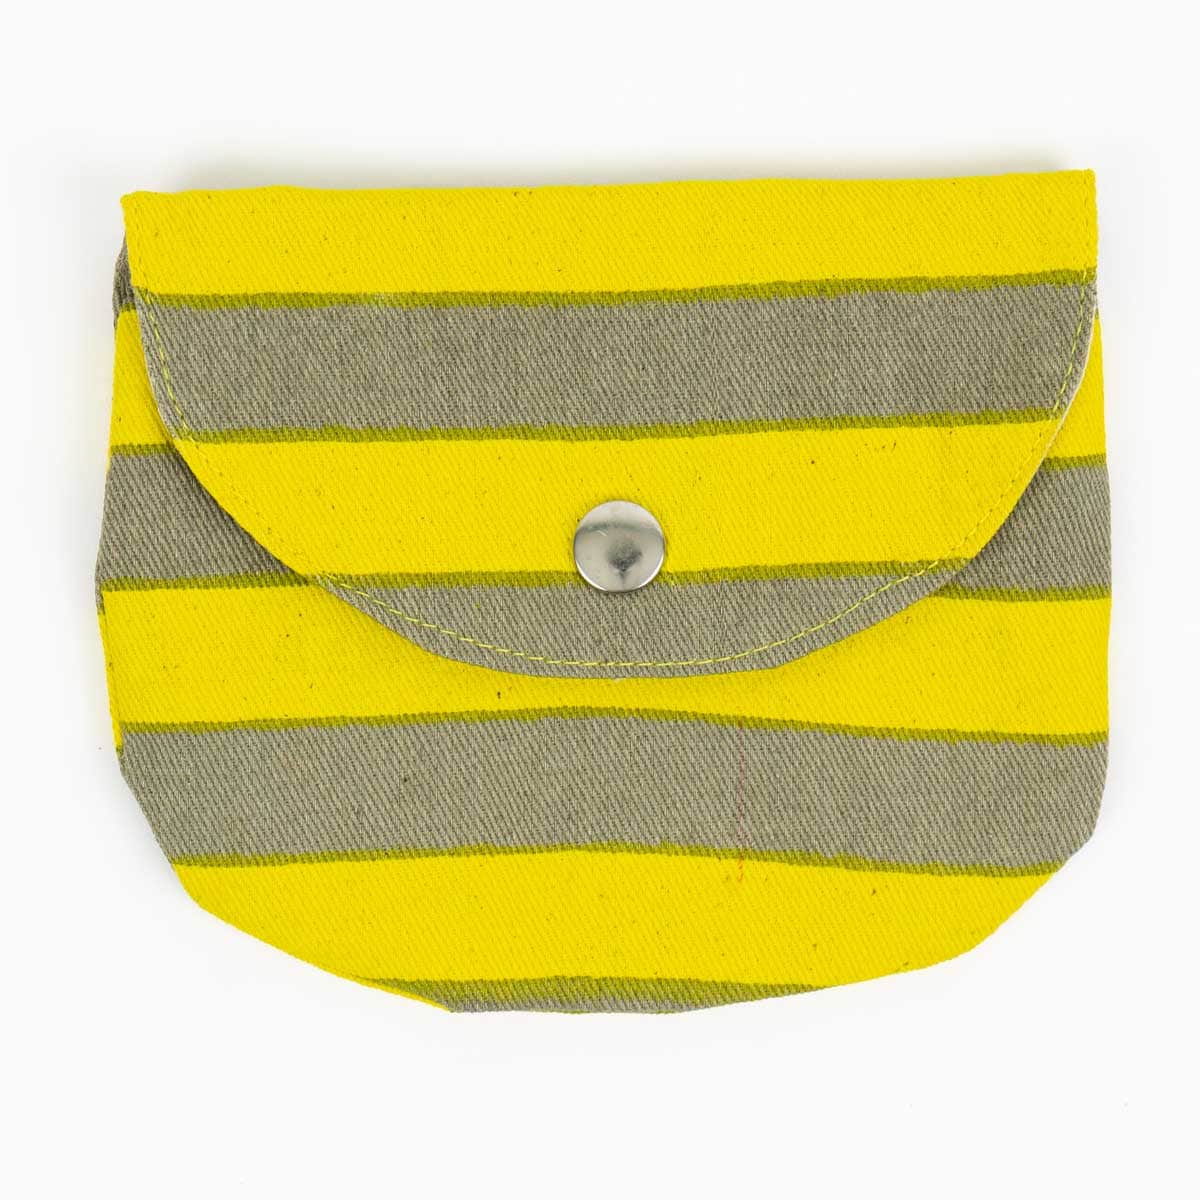 RANDA Purse, yellow/grey